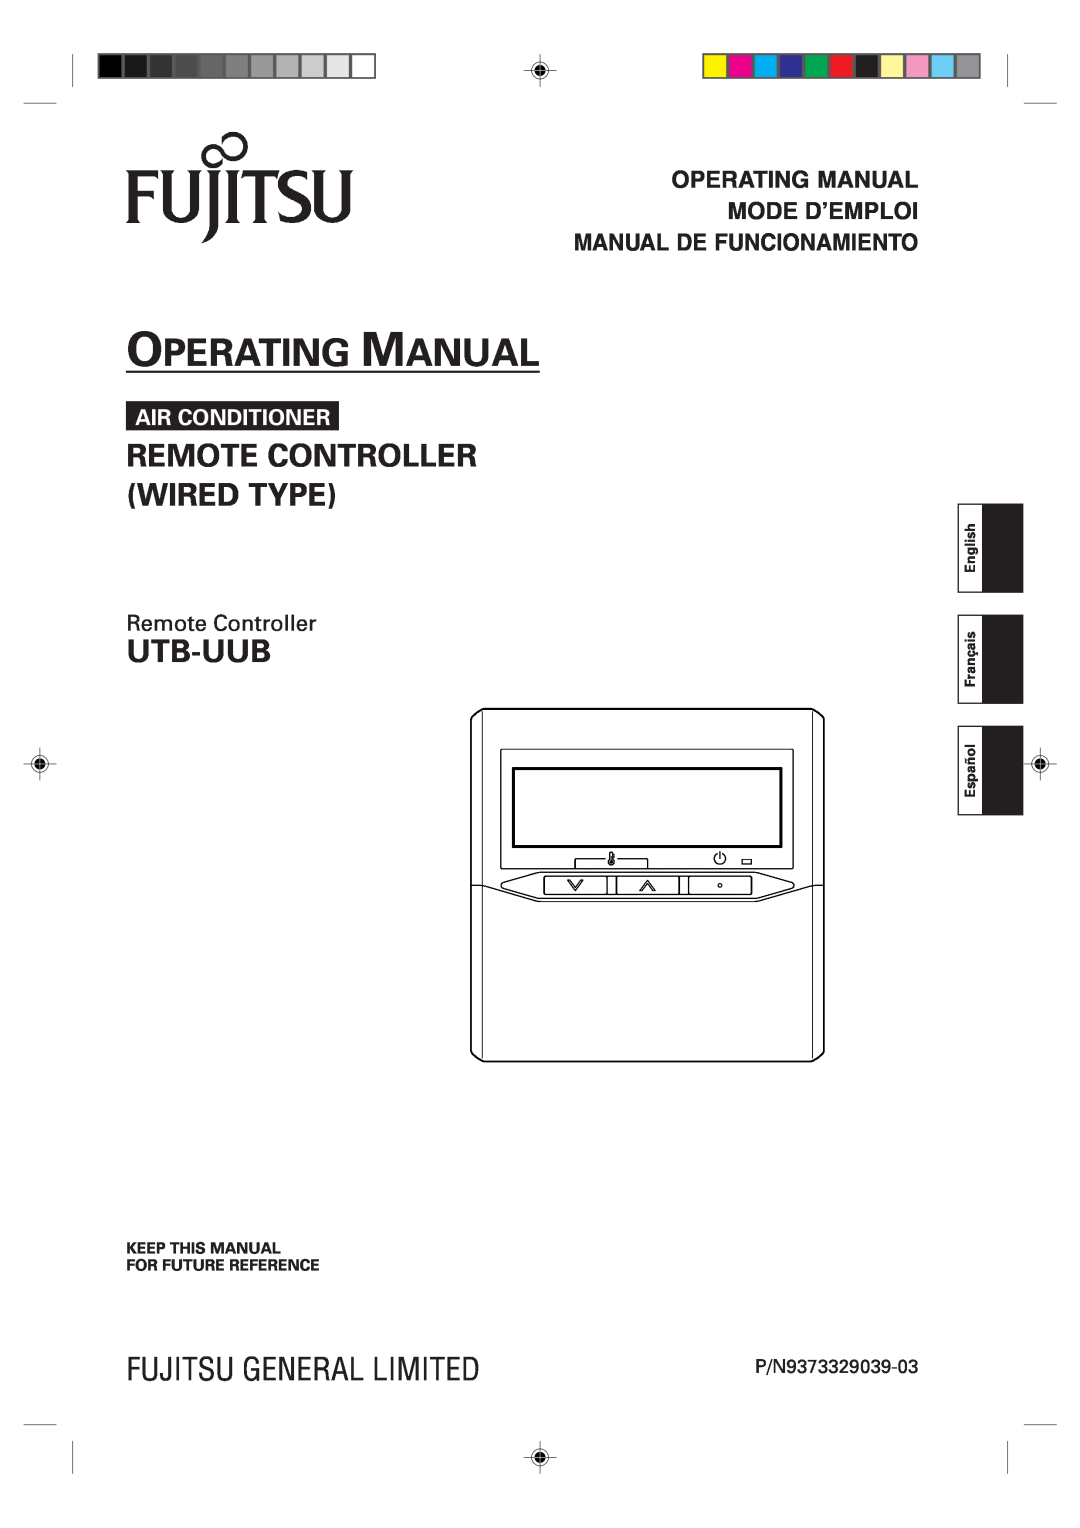 Fujitsu Remote Controller manual Keep This Manual For Future Reference, Operating Manual, Utb-Uub, Fujitsu General Limited 